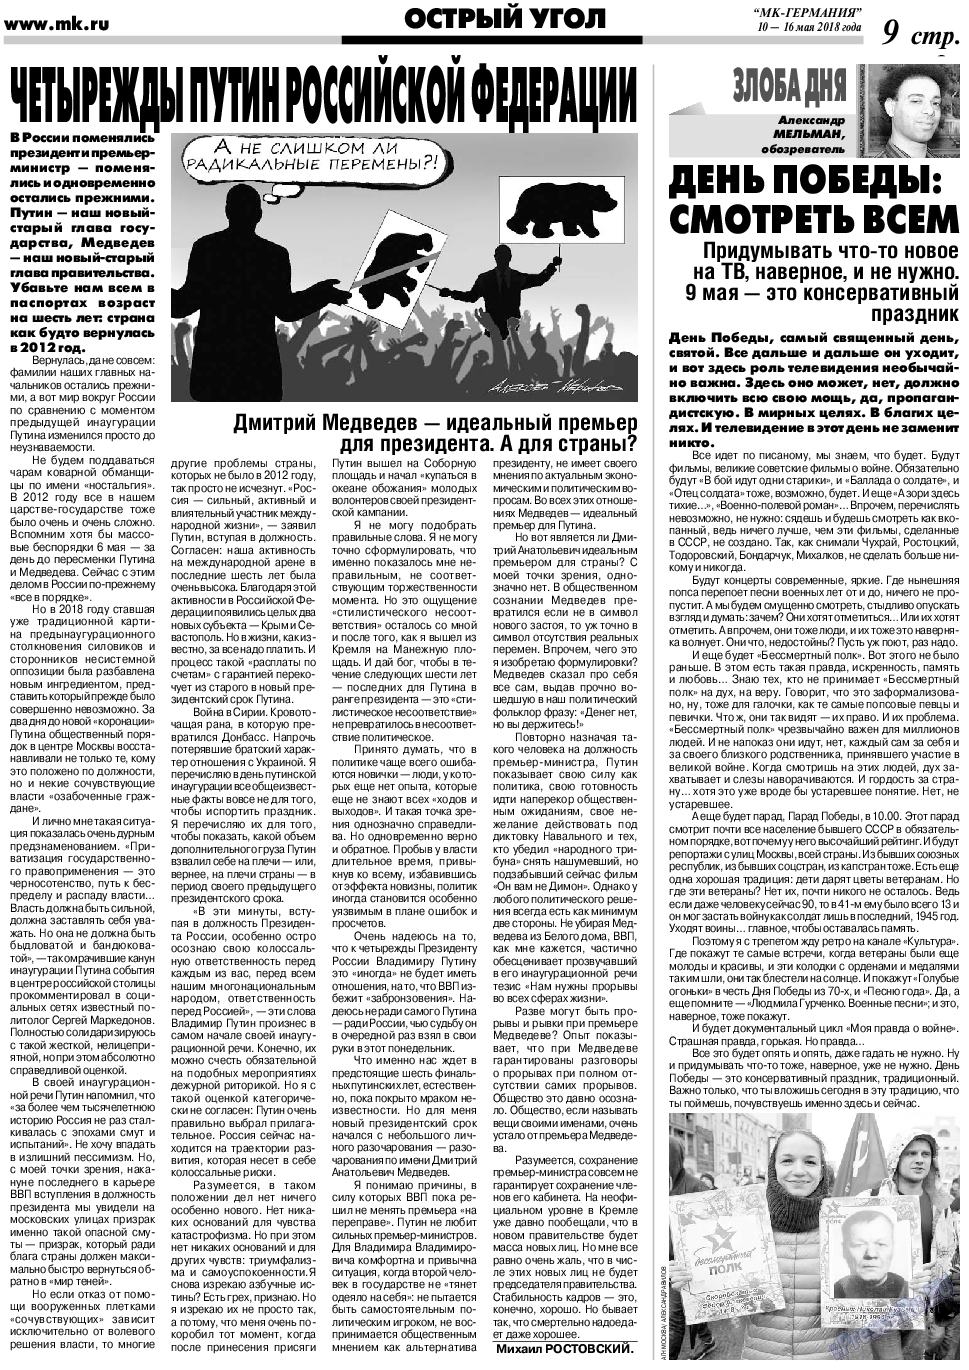 МК-Германия, газета. 2018 №20 стр.9